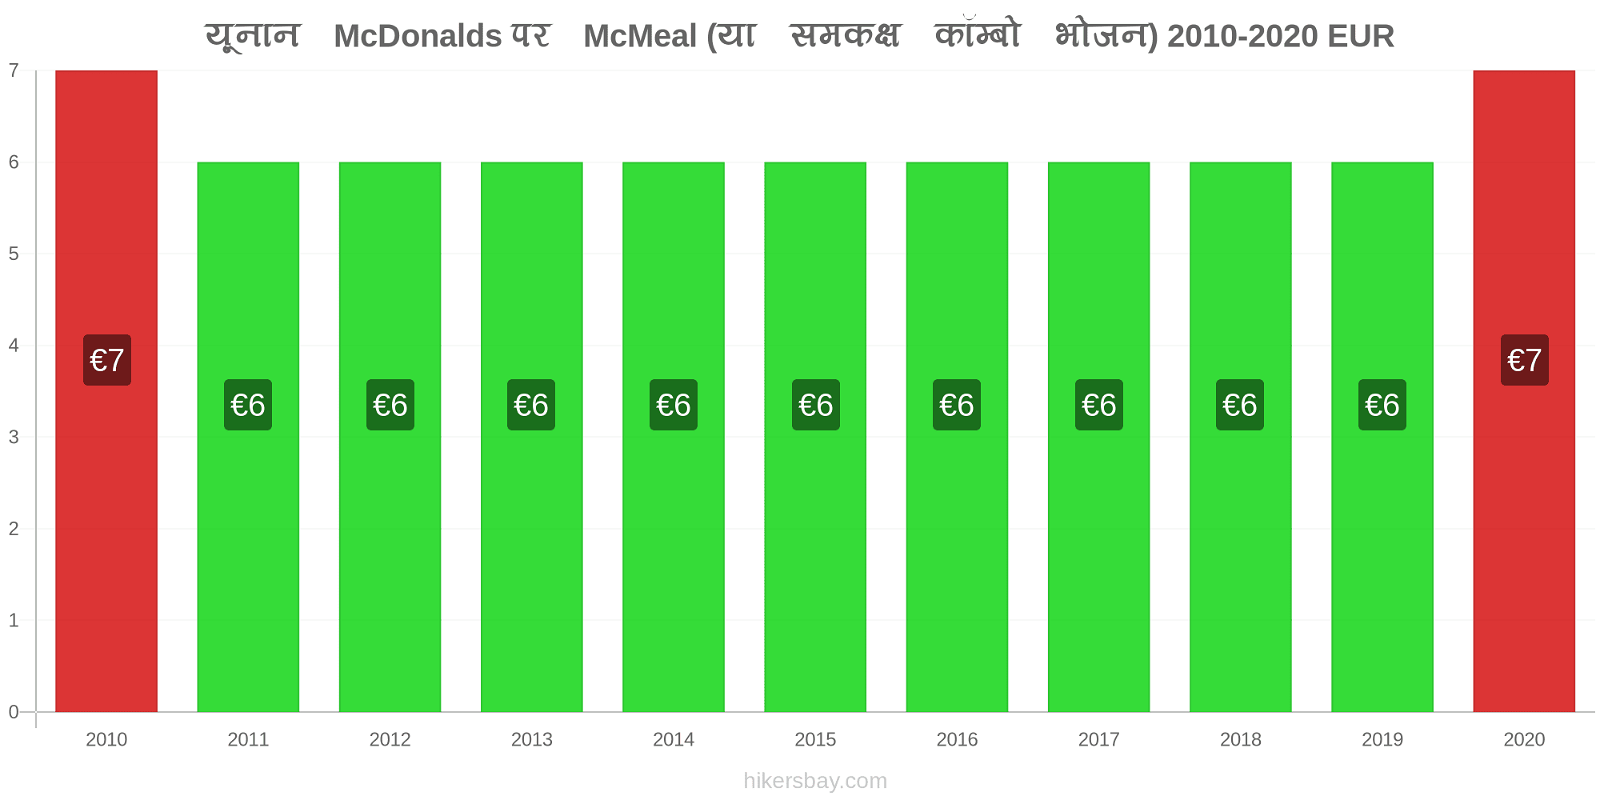 यूनान मूल्य परिवर्तन McDonalds पर McMeal (या समकक्ष कॉम्बो भोजन) hikersbay.com